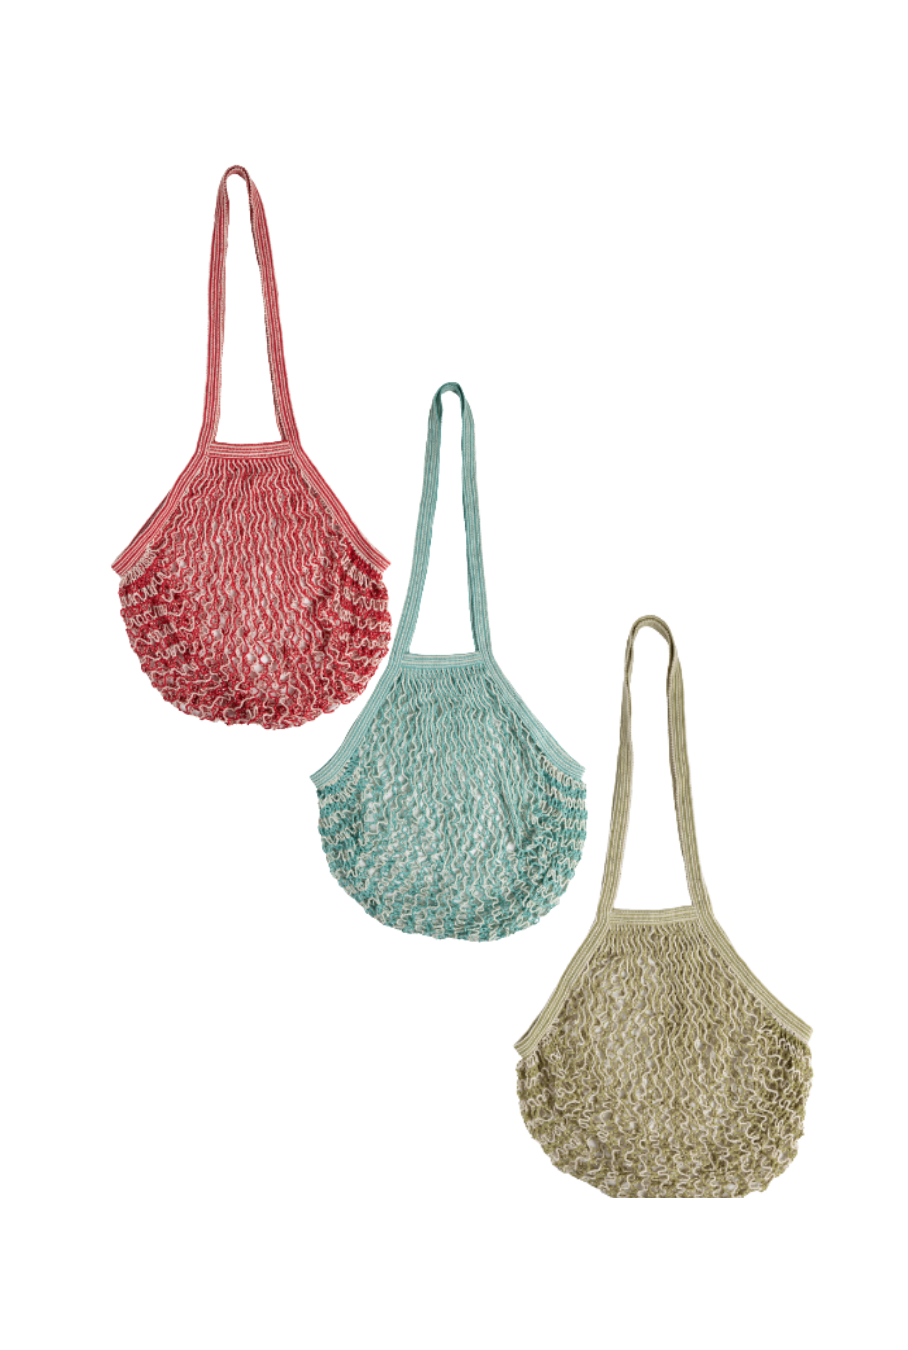 Organic String Bag - Hygge Collection.